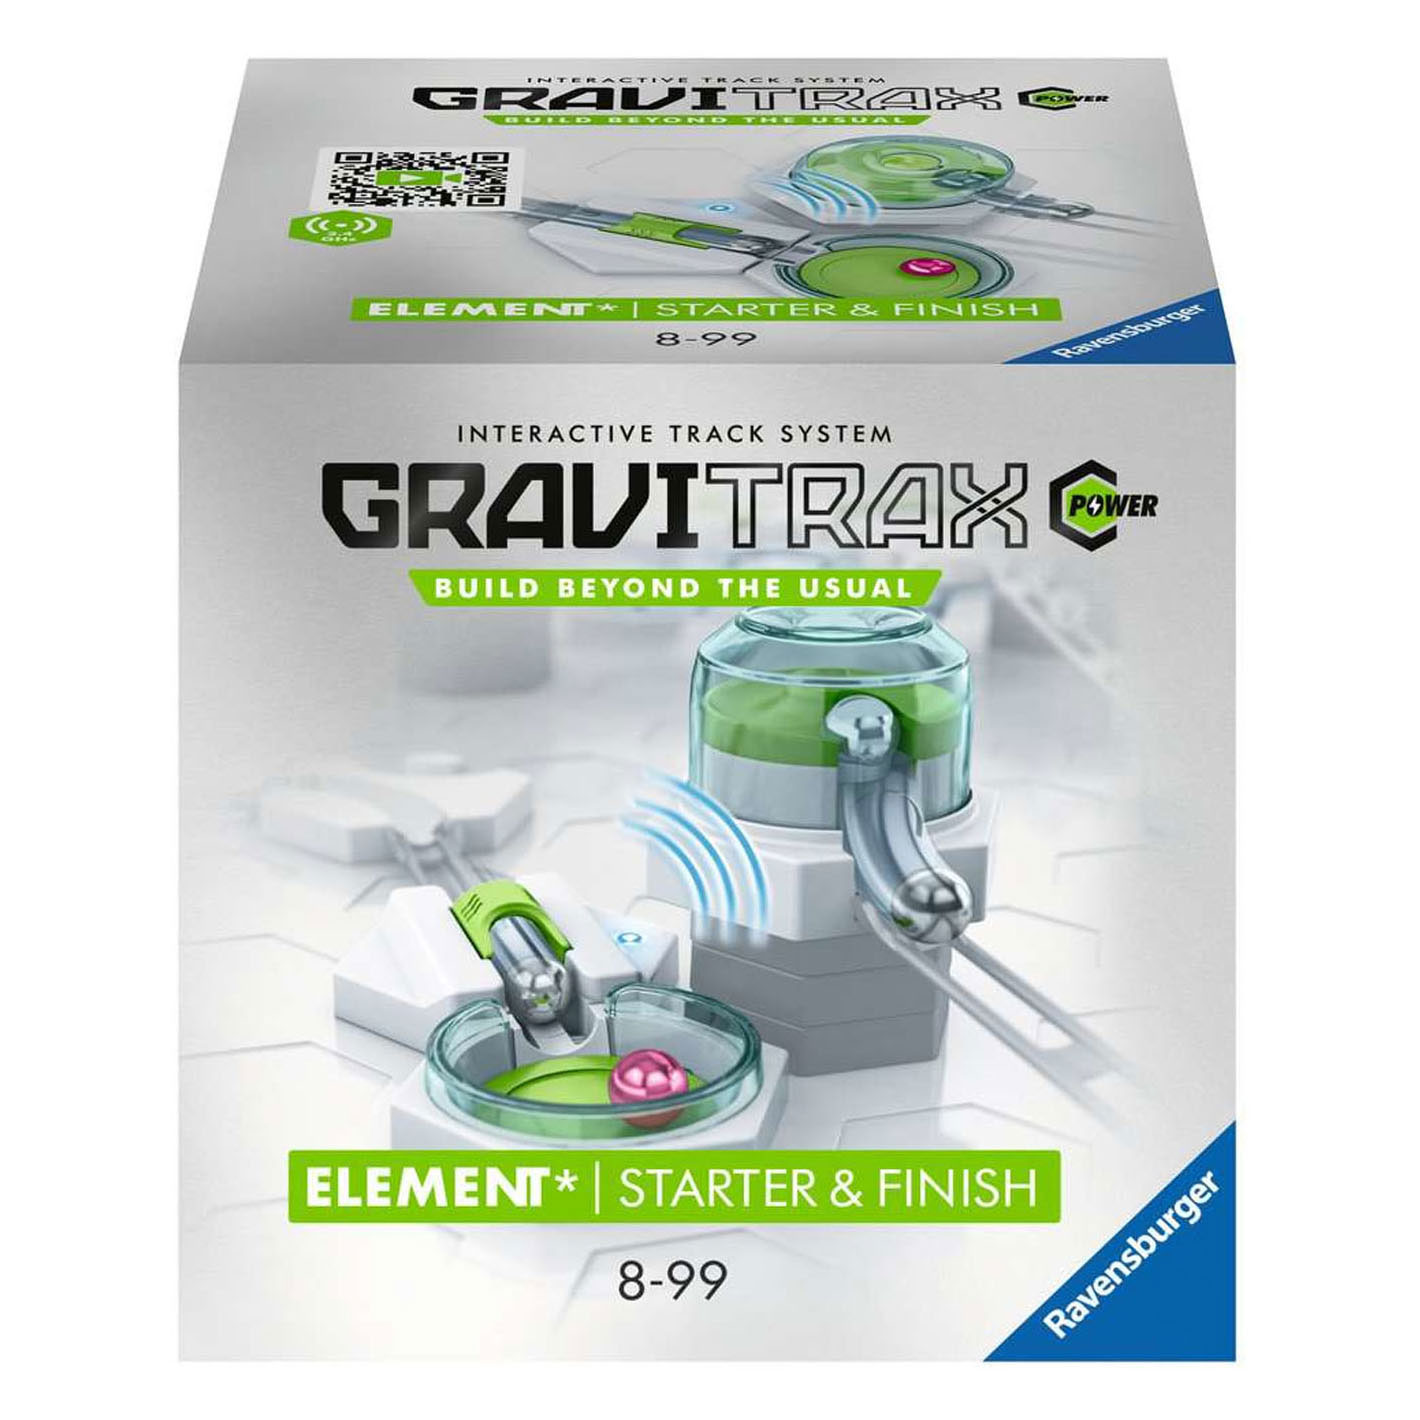 Gravitrax Power Element Remote Expansion Set